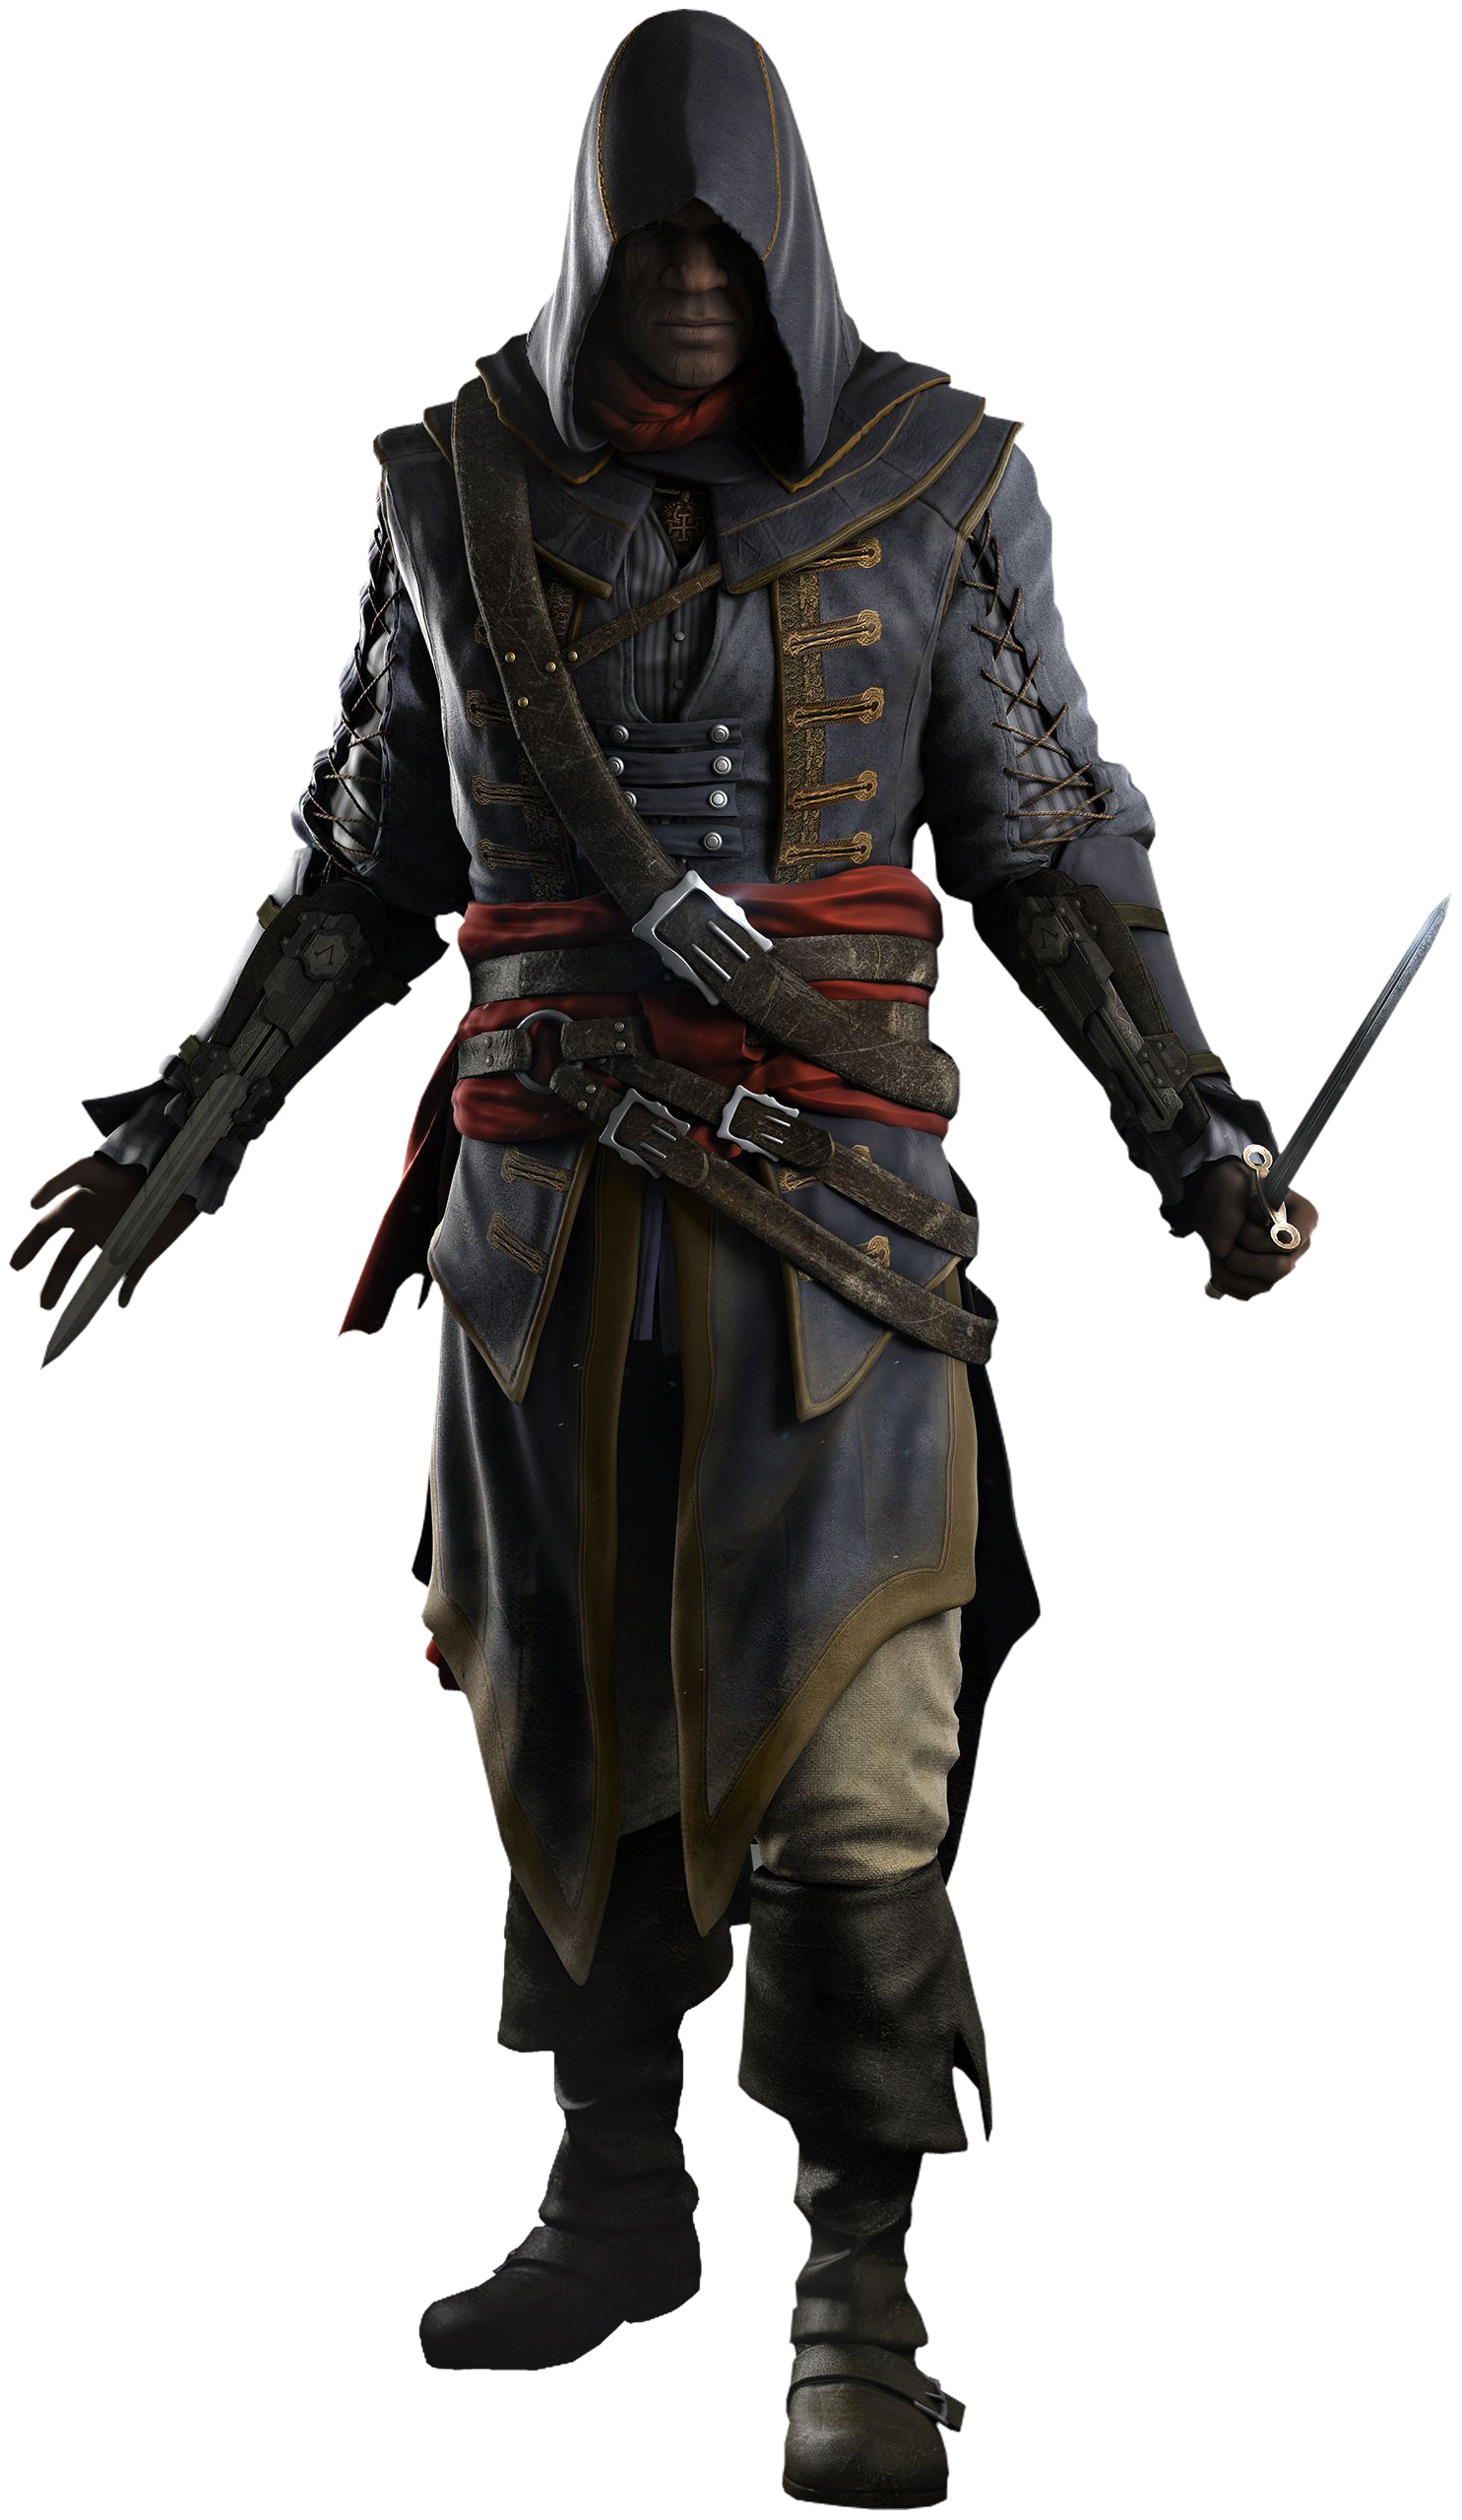 Grito de Liberdade, Assassin's Creed Wiki